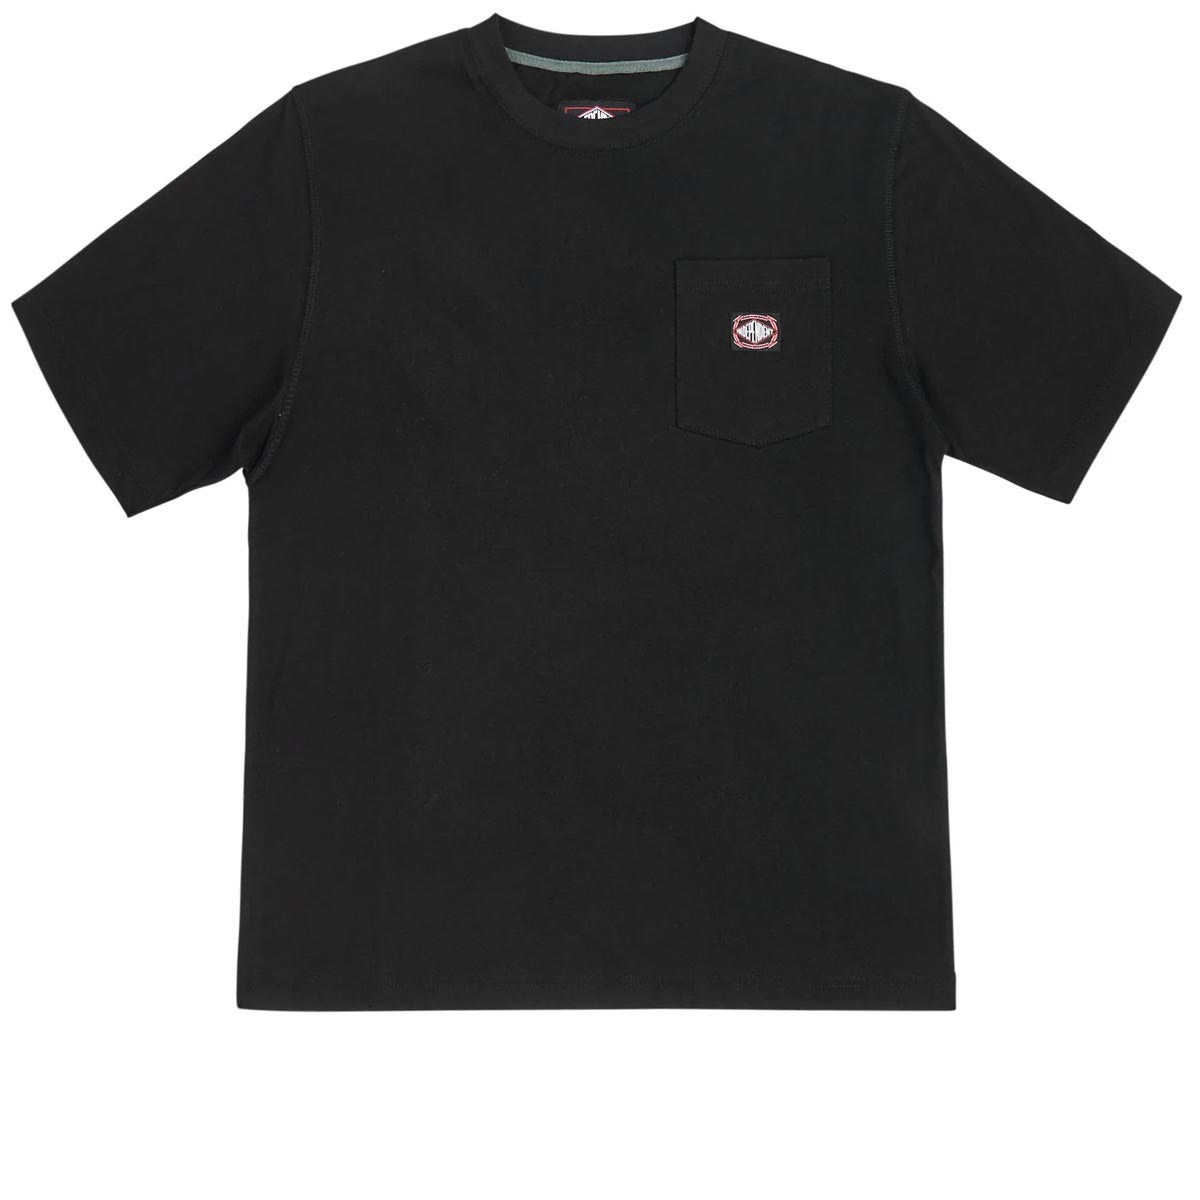 Independent Summit Scroll Pocket T-Shirt - Black image 1